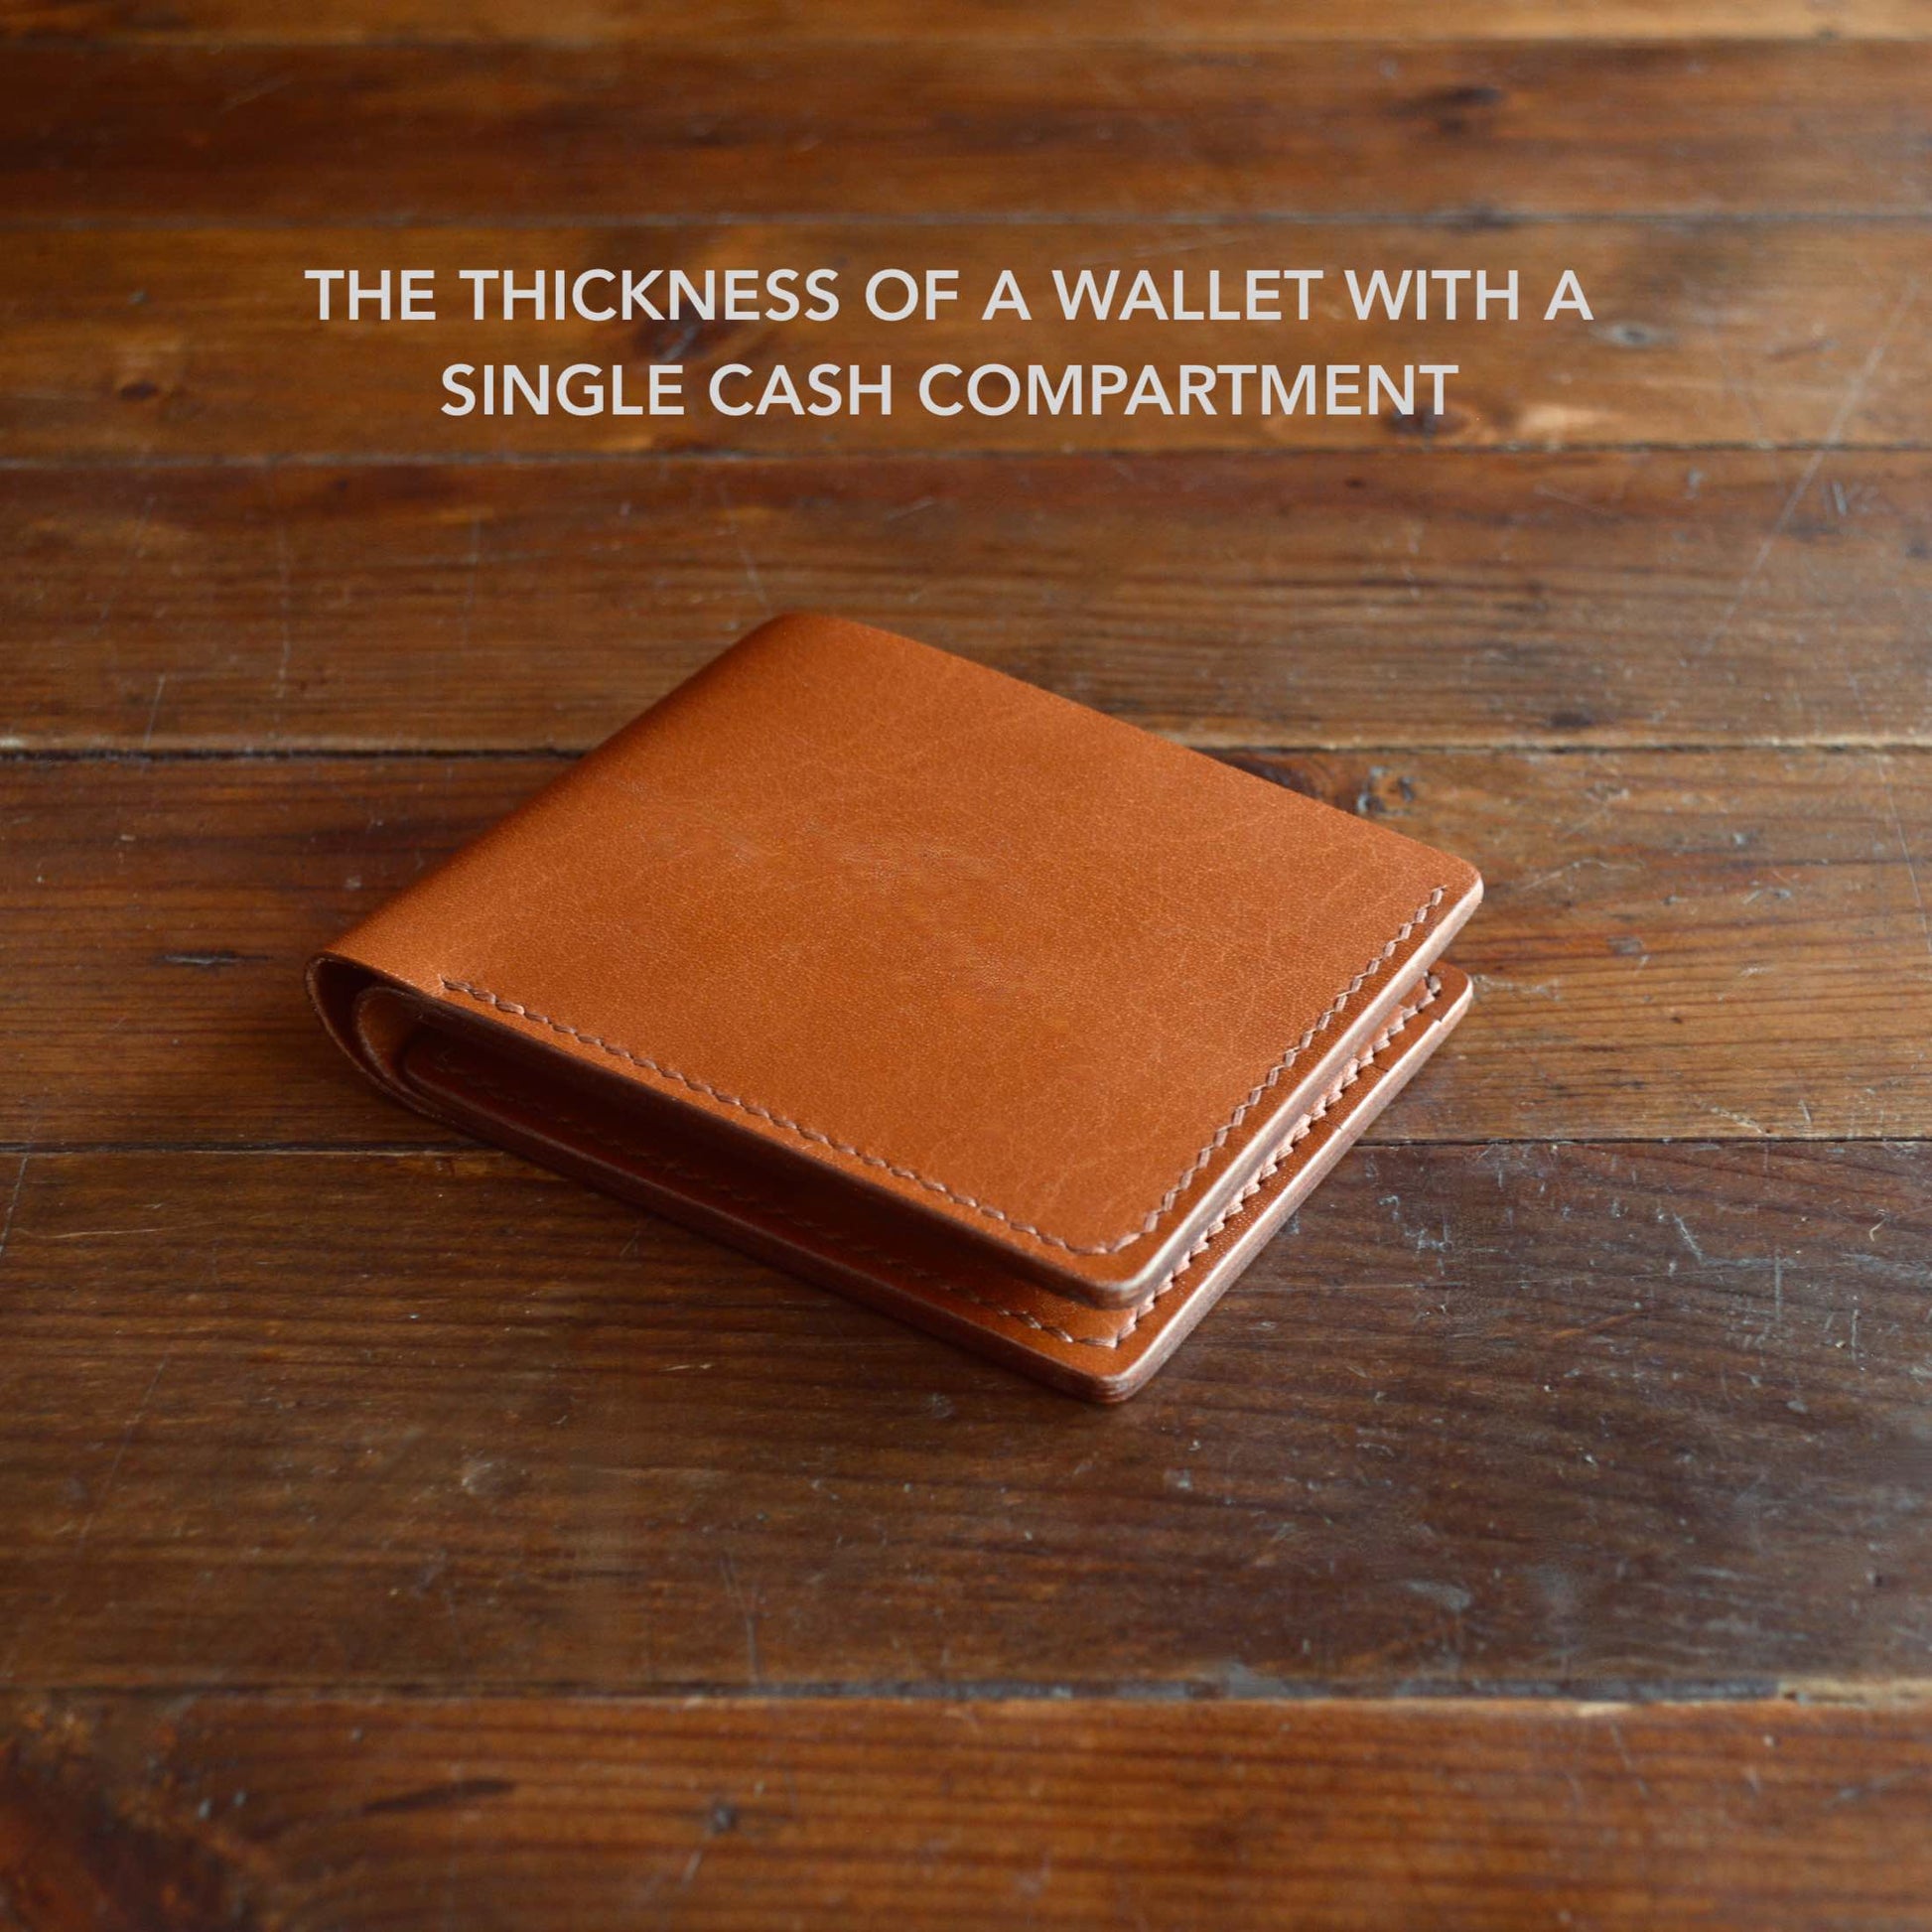 Coin Pocket Wallet in Veg Tan Leather | Handmade Luxury One Cash Pocket